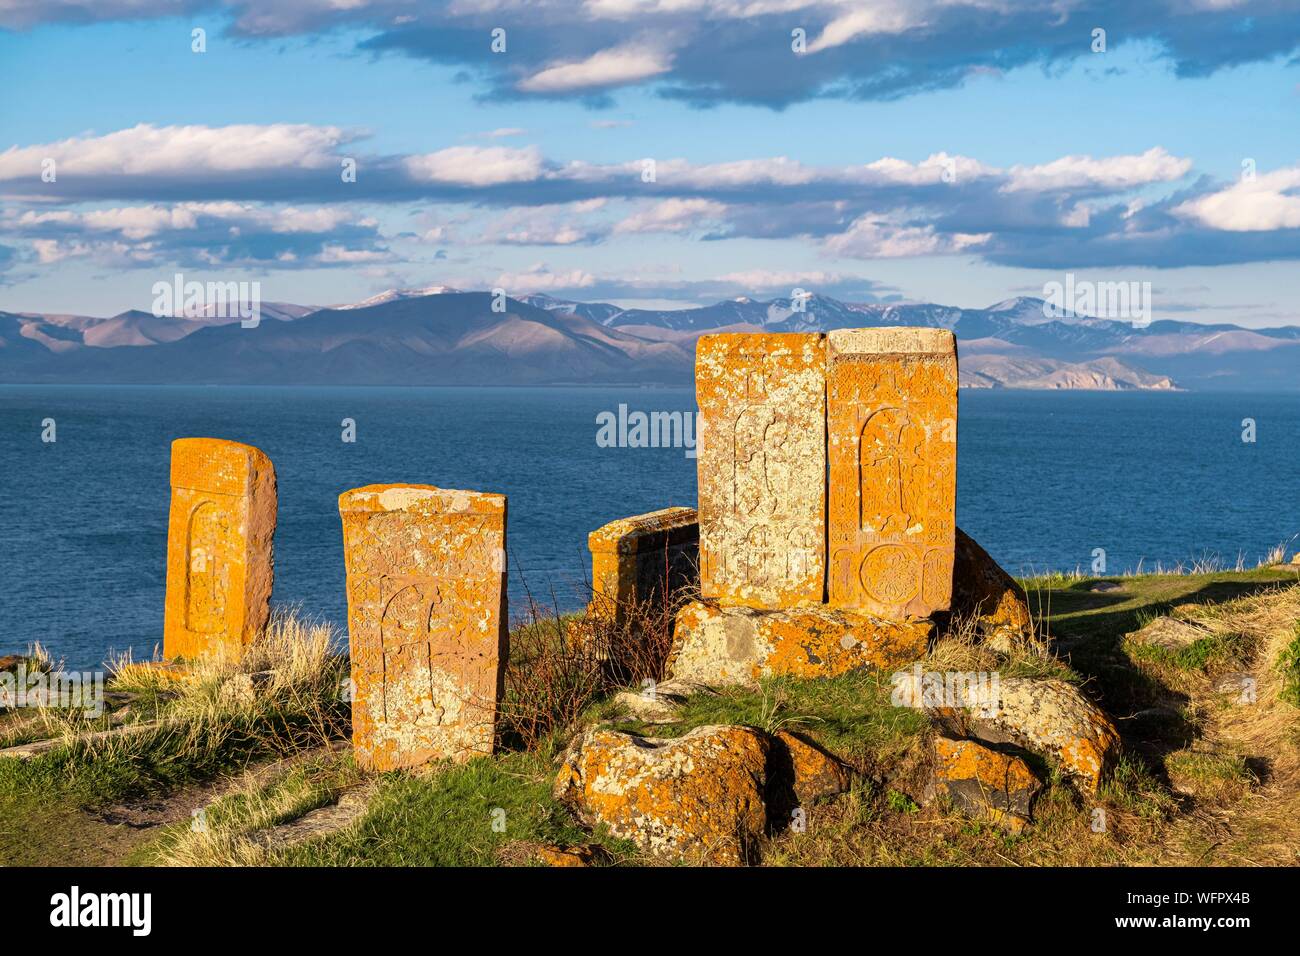 Armenia, Gegharkunik region, Hayravank, the 9th and 10th centuries Hayravank monastery built on a rocky promontory overlooking Sevan Lake, khatchkars (carved memorial steles) Stock Photo